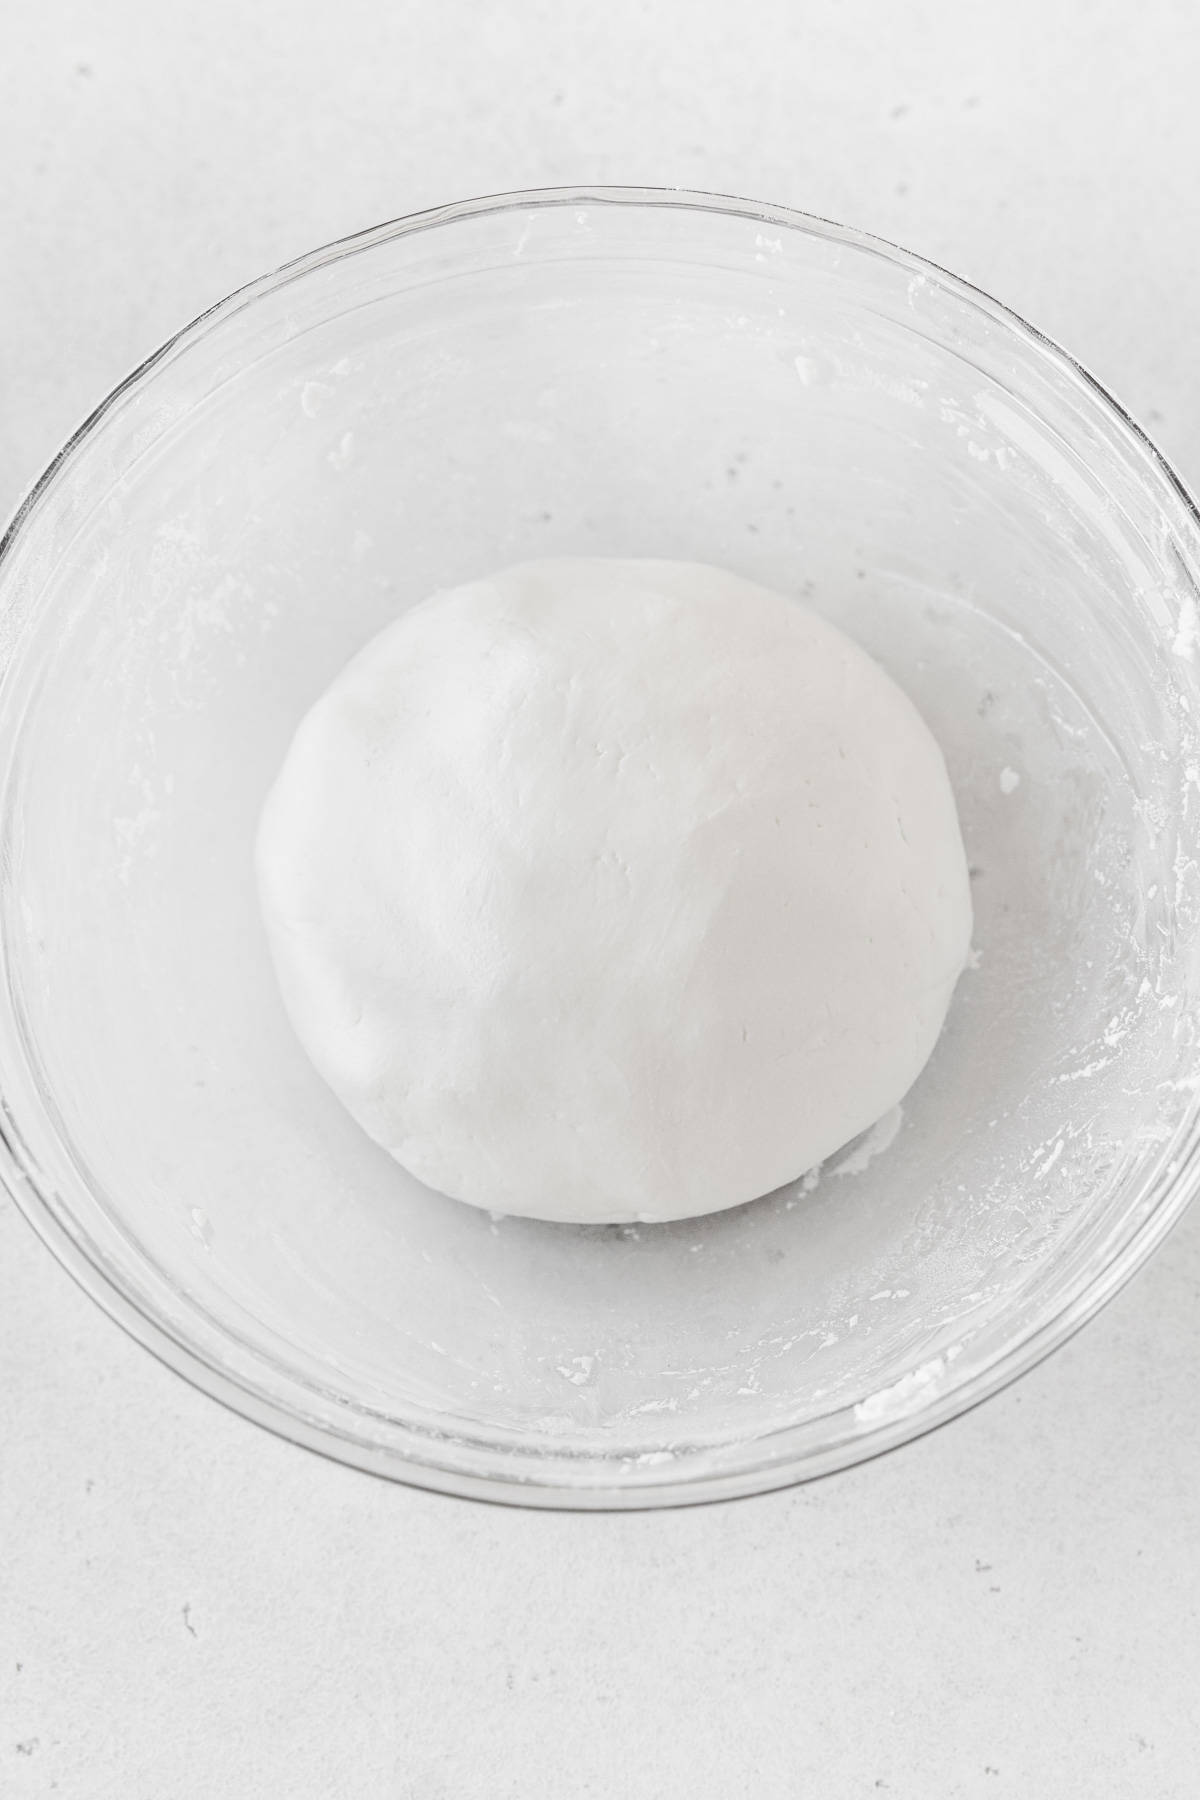 Shiratama dango dough after being kneaded into a smooth ball.